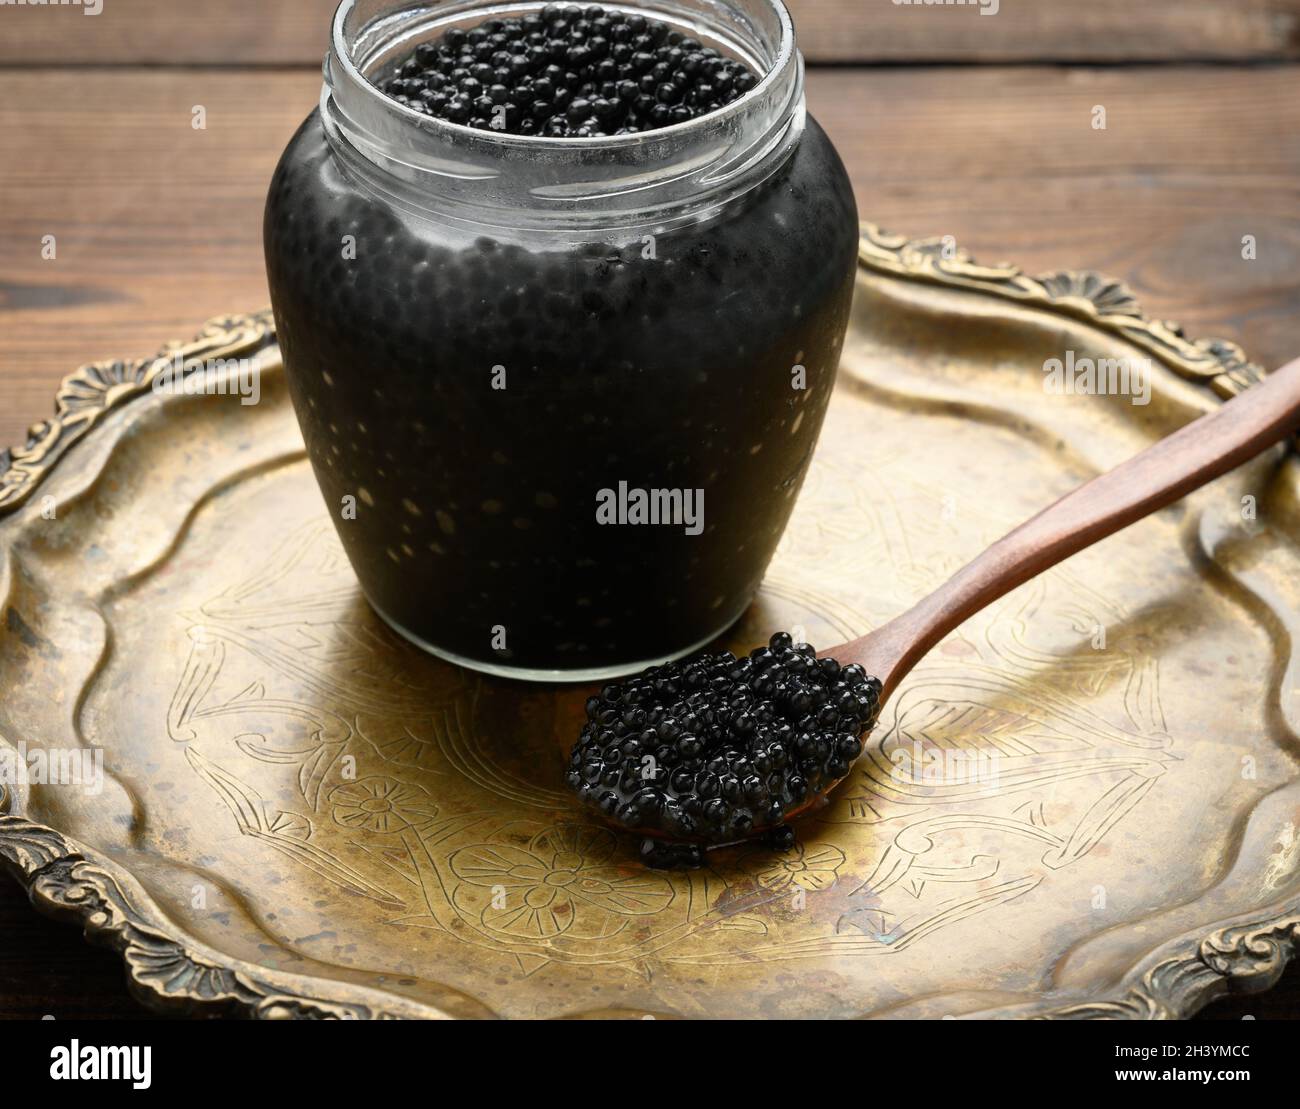 Caviar de pez espada negro fresco en una cuchara marrón de madera y una lata completa de caviar en una mesa de madera Foto de stock